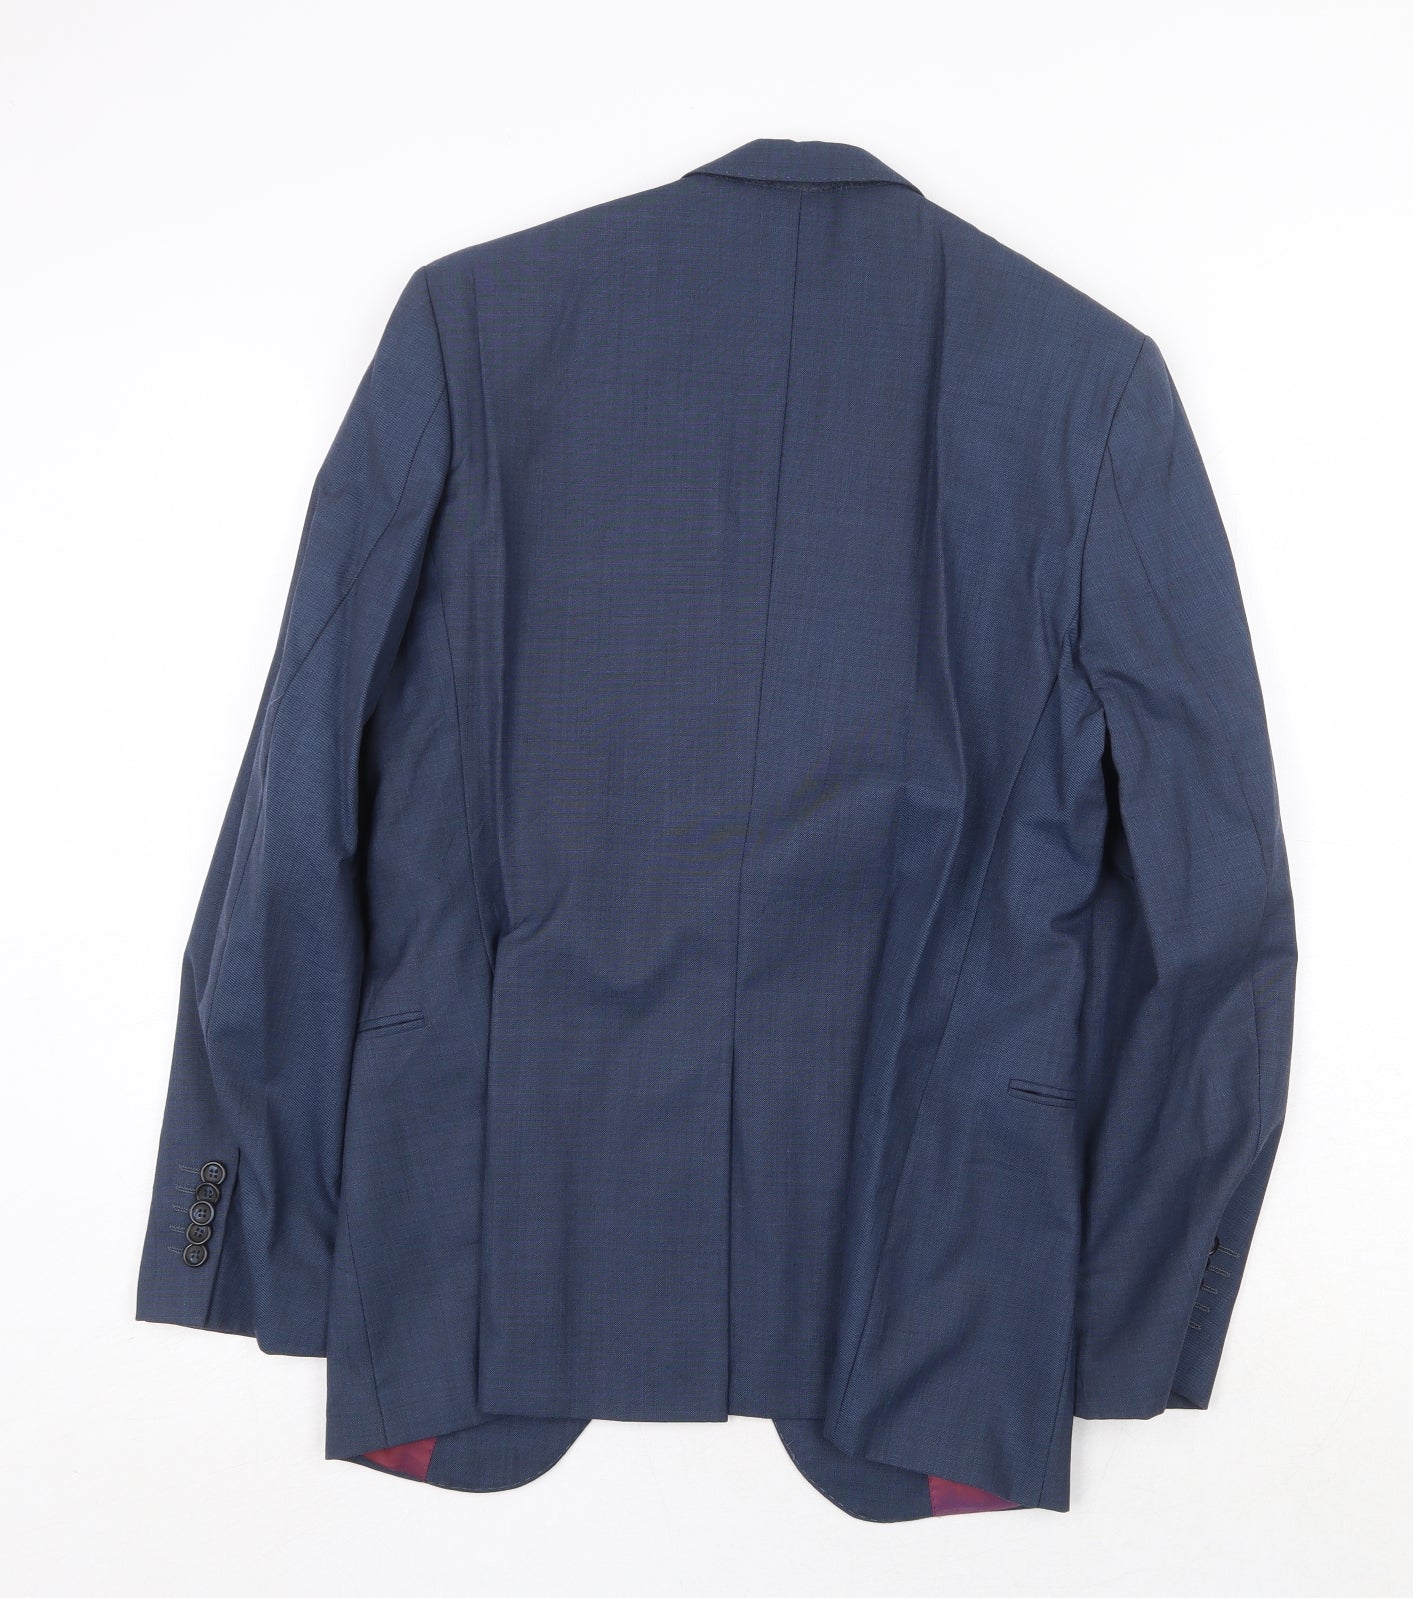 Cedar Wood State Mens Blue Wool Jacket Suit Jacket Size 38 Regular - 5 button sleeve